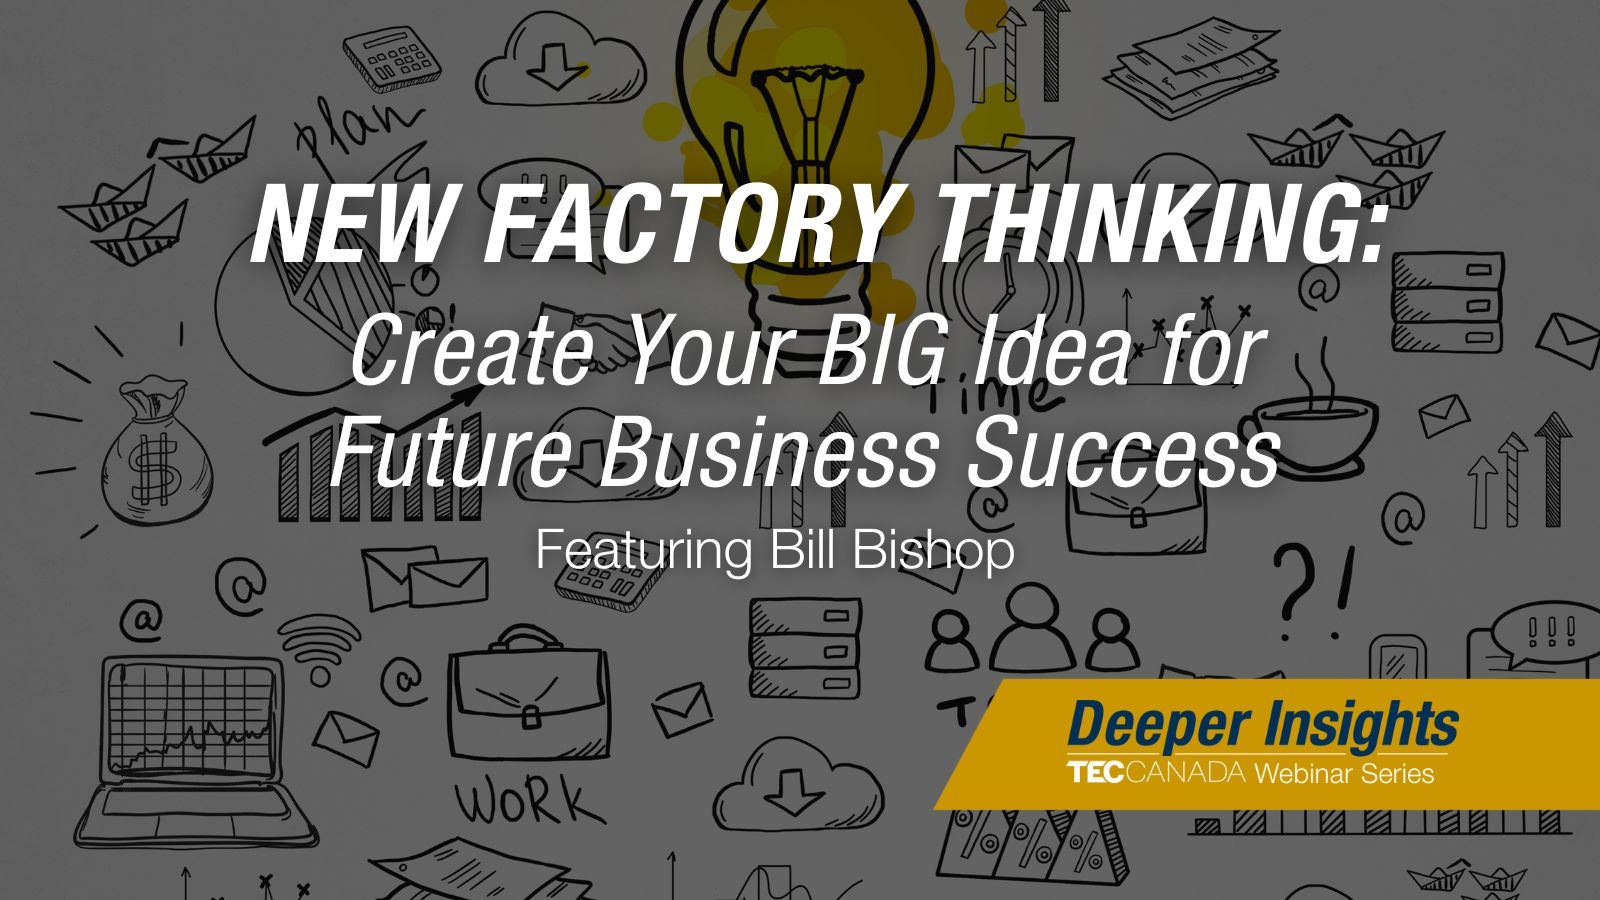 Bill Bishop is an entrepreneur, author, keynote speaker, and BIG Idea coach.